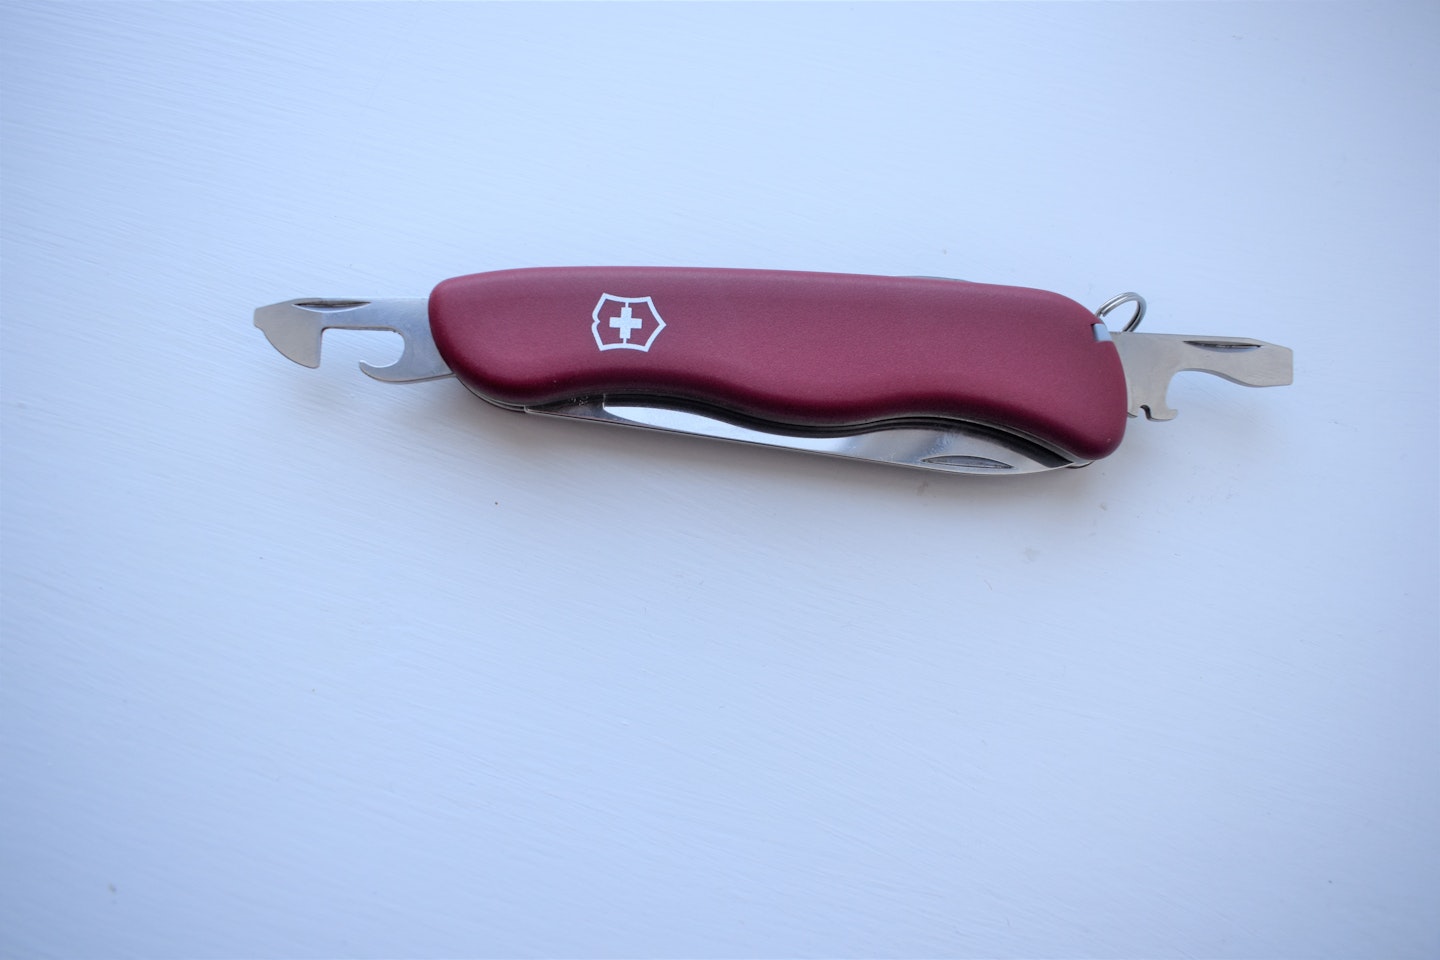 The Victorinox Adventurer pocket knife with bottle opener and tin opener